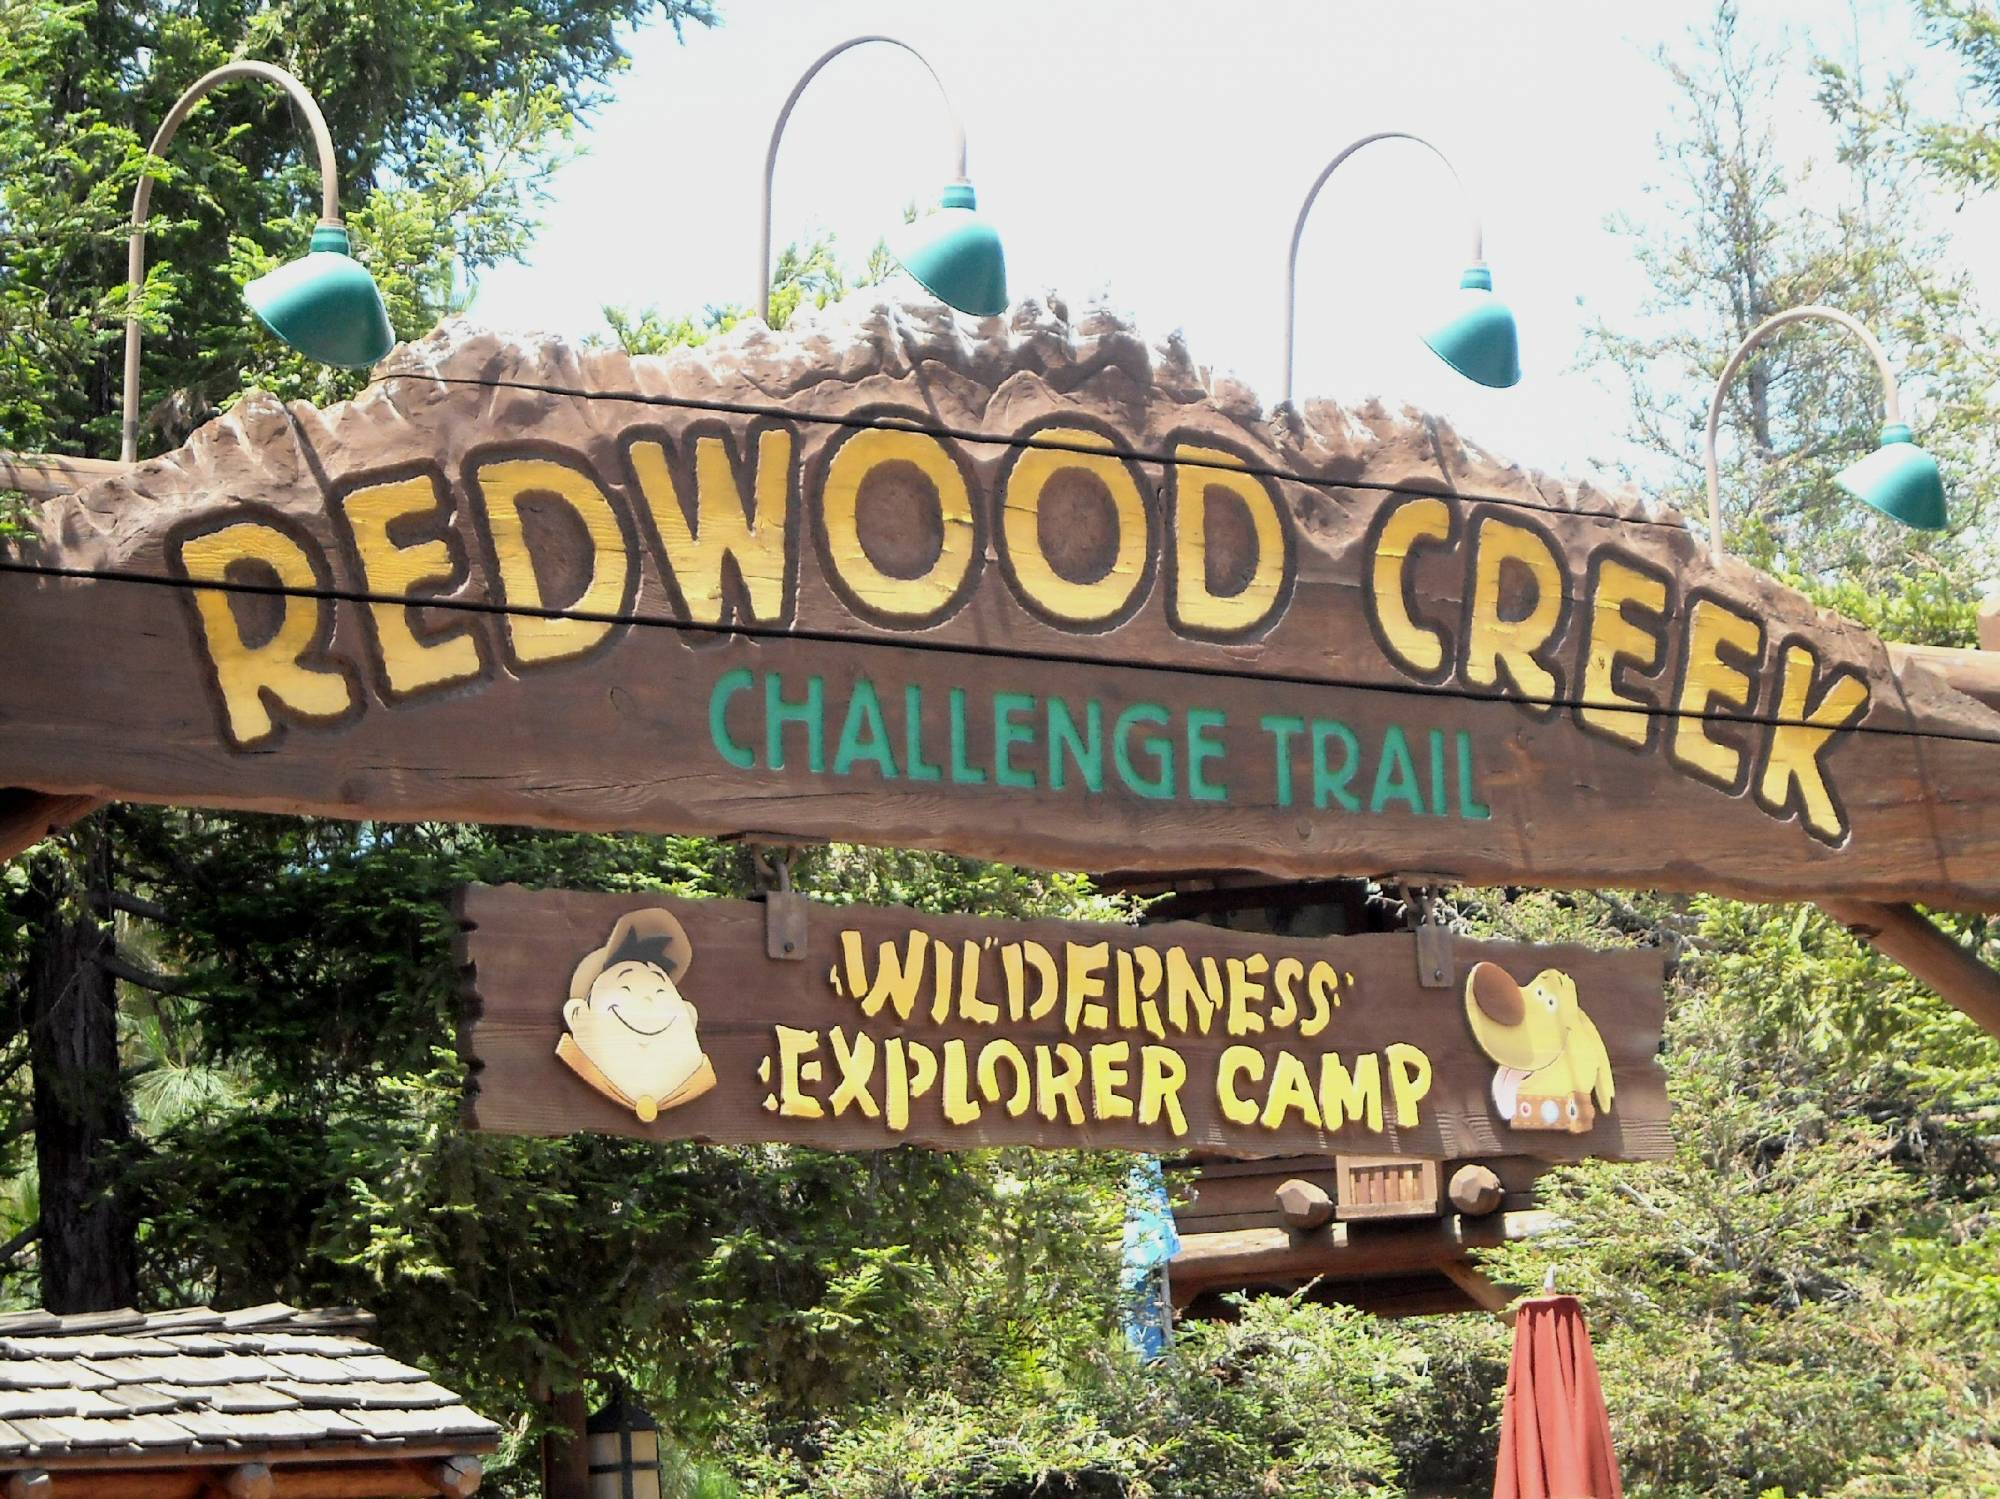 Redwood Creek Challenge Trail Sign (Close)